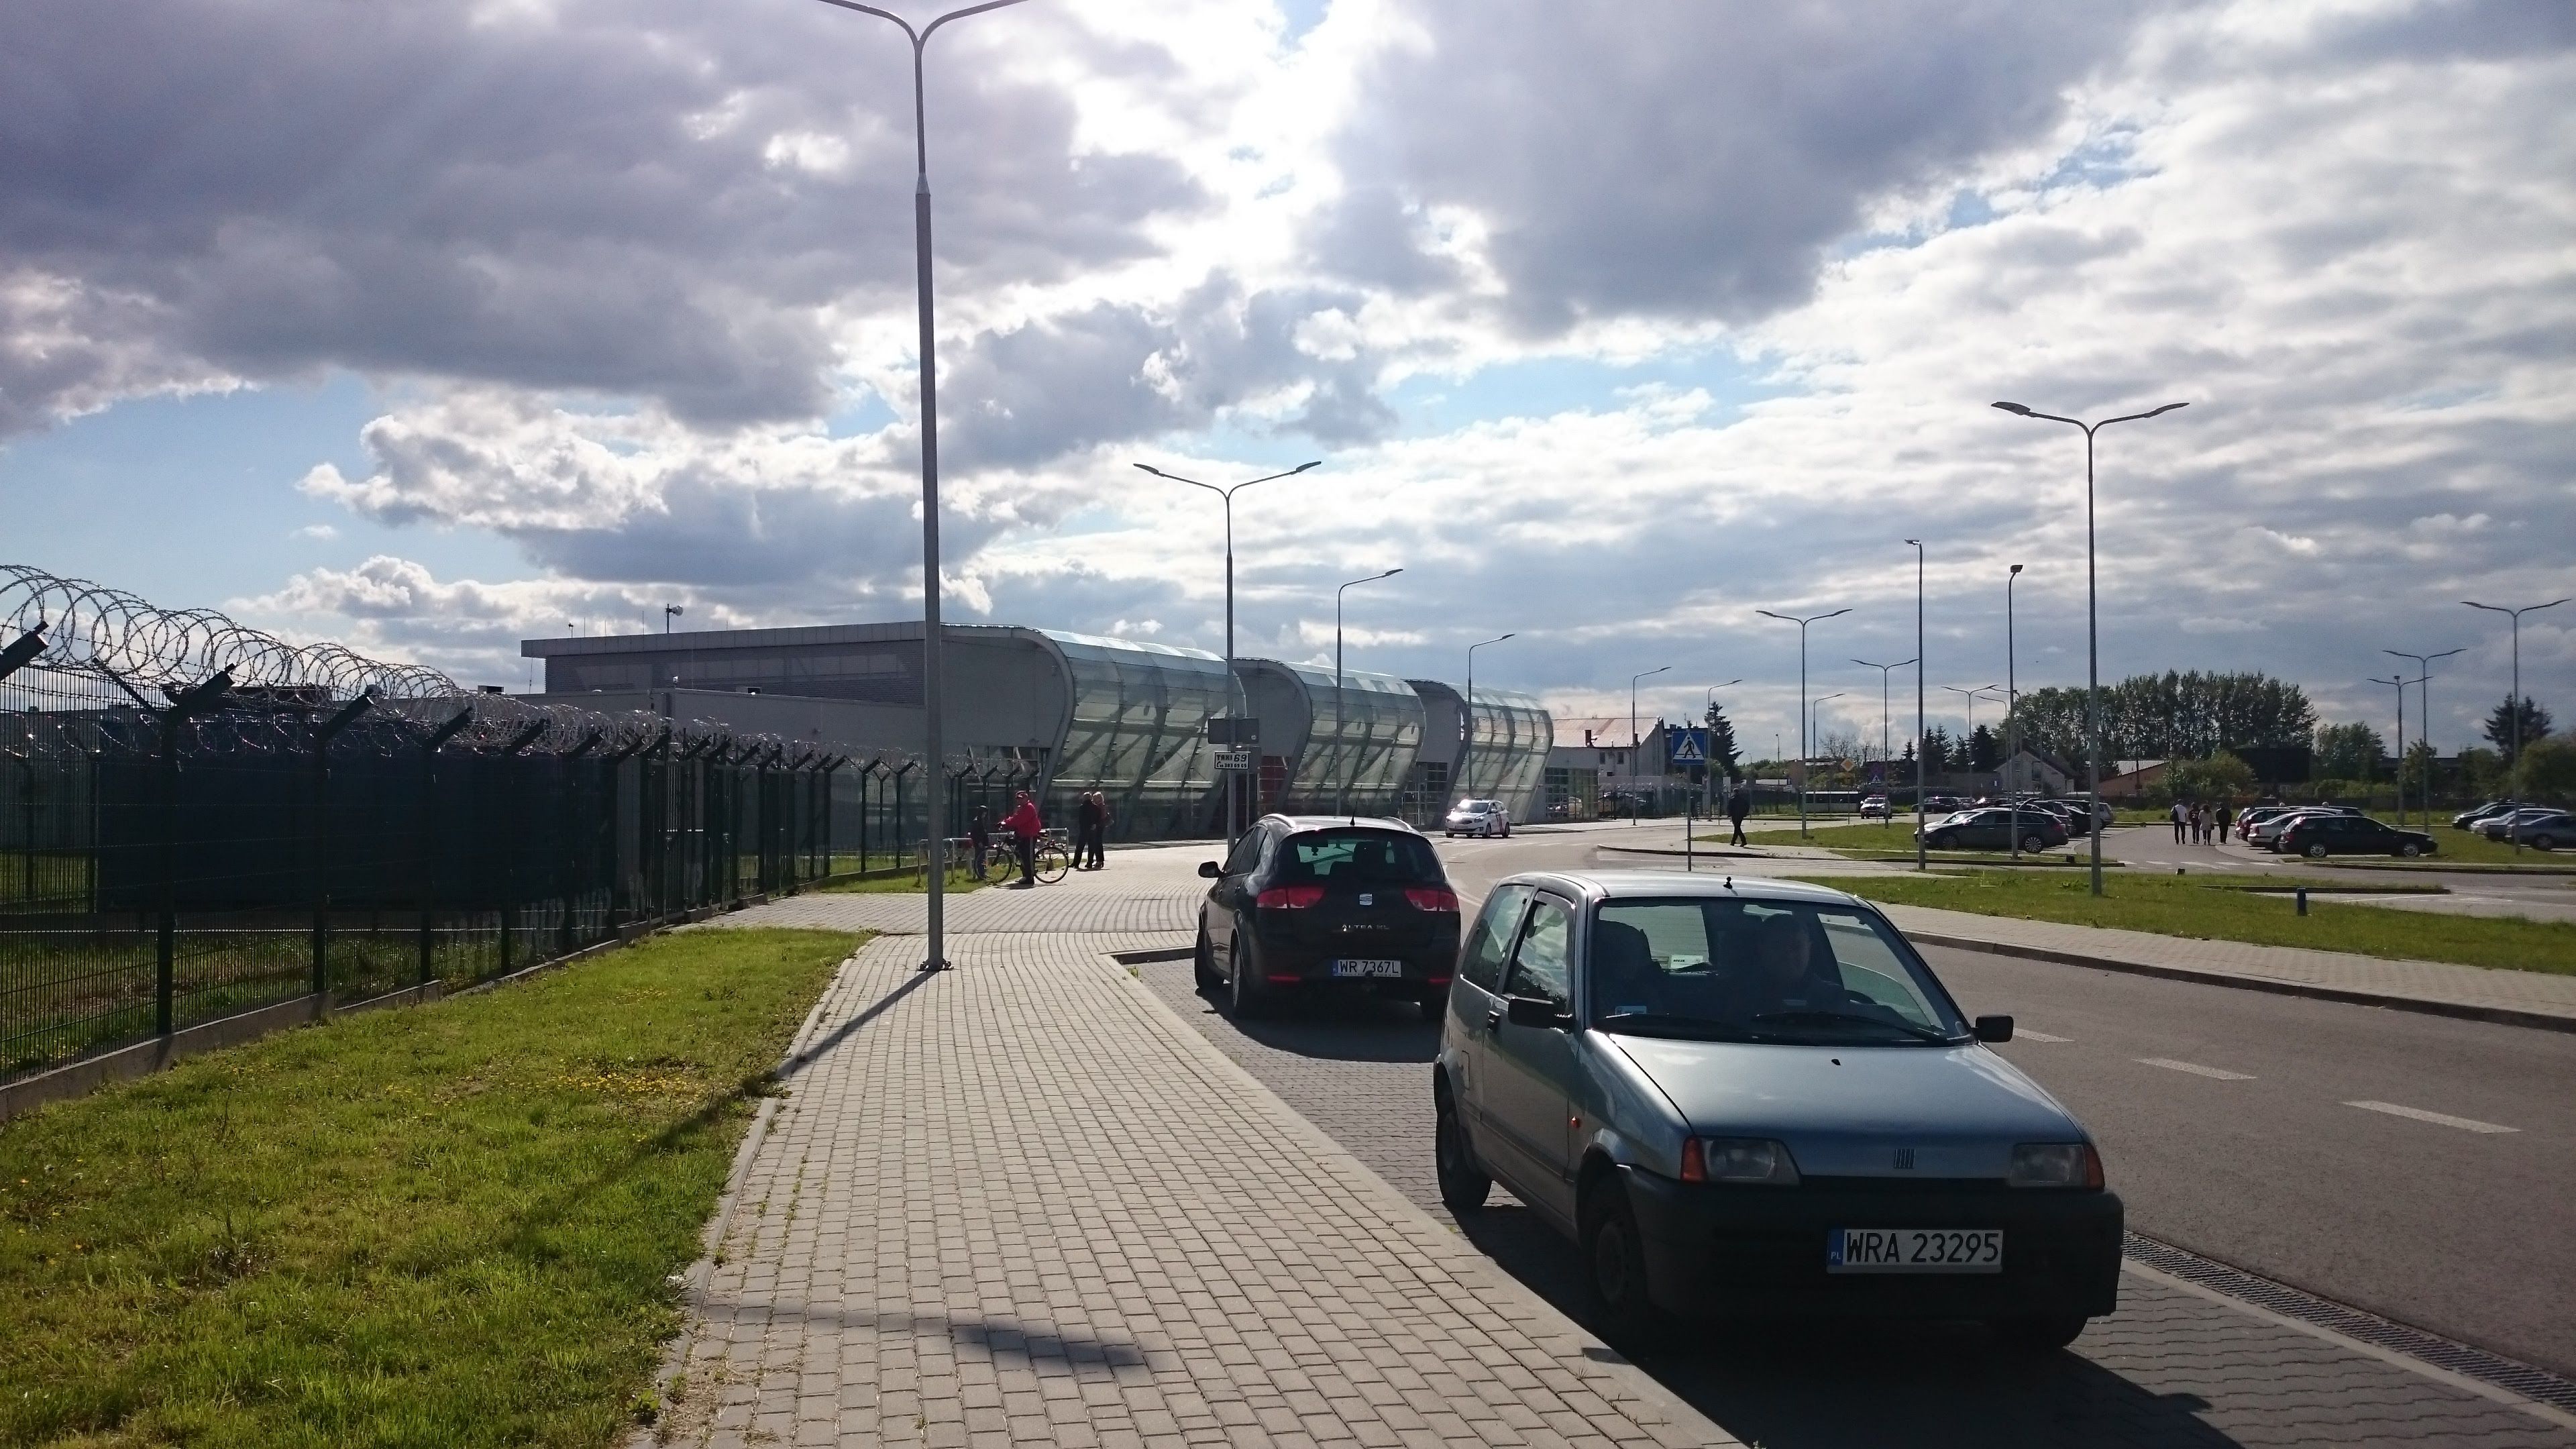 Lotnisko w Radomiu